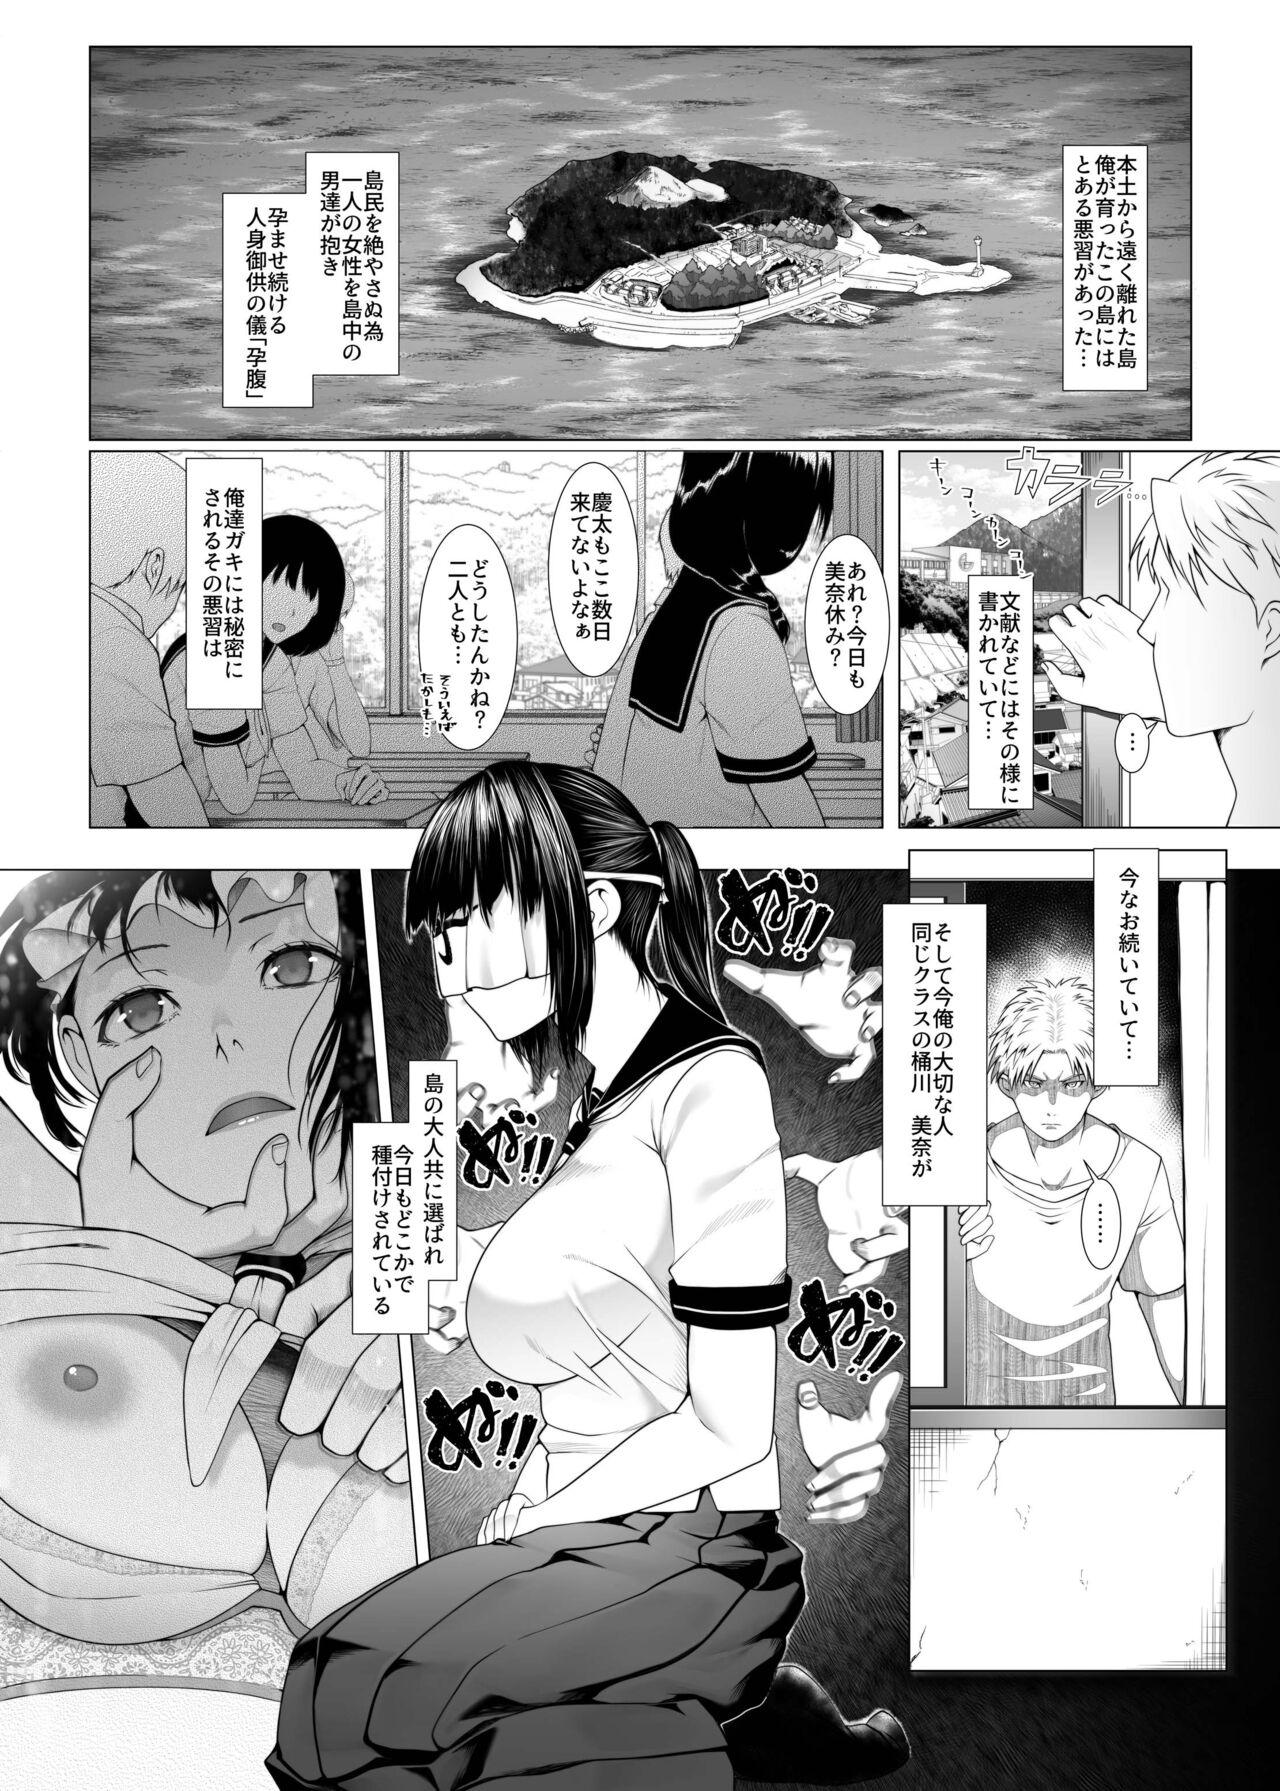 Couple Sex Haramase no Shima 4 - Original Bj - Page 2